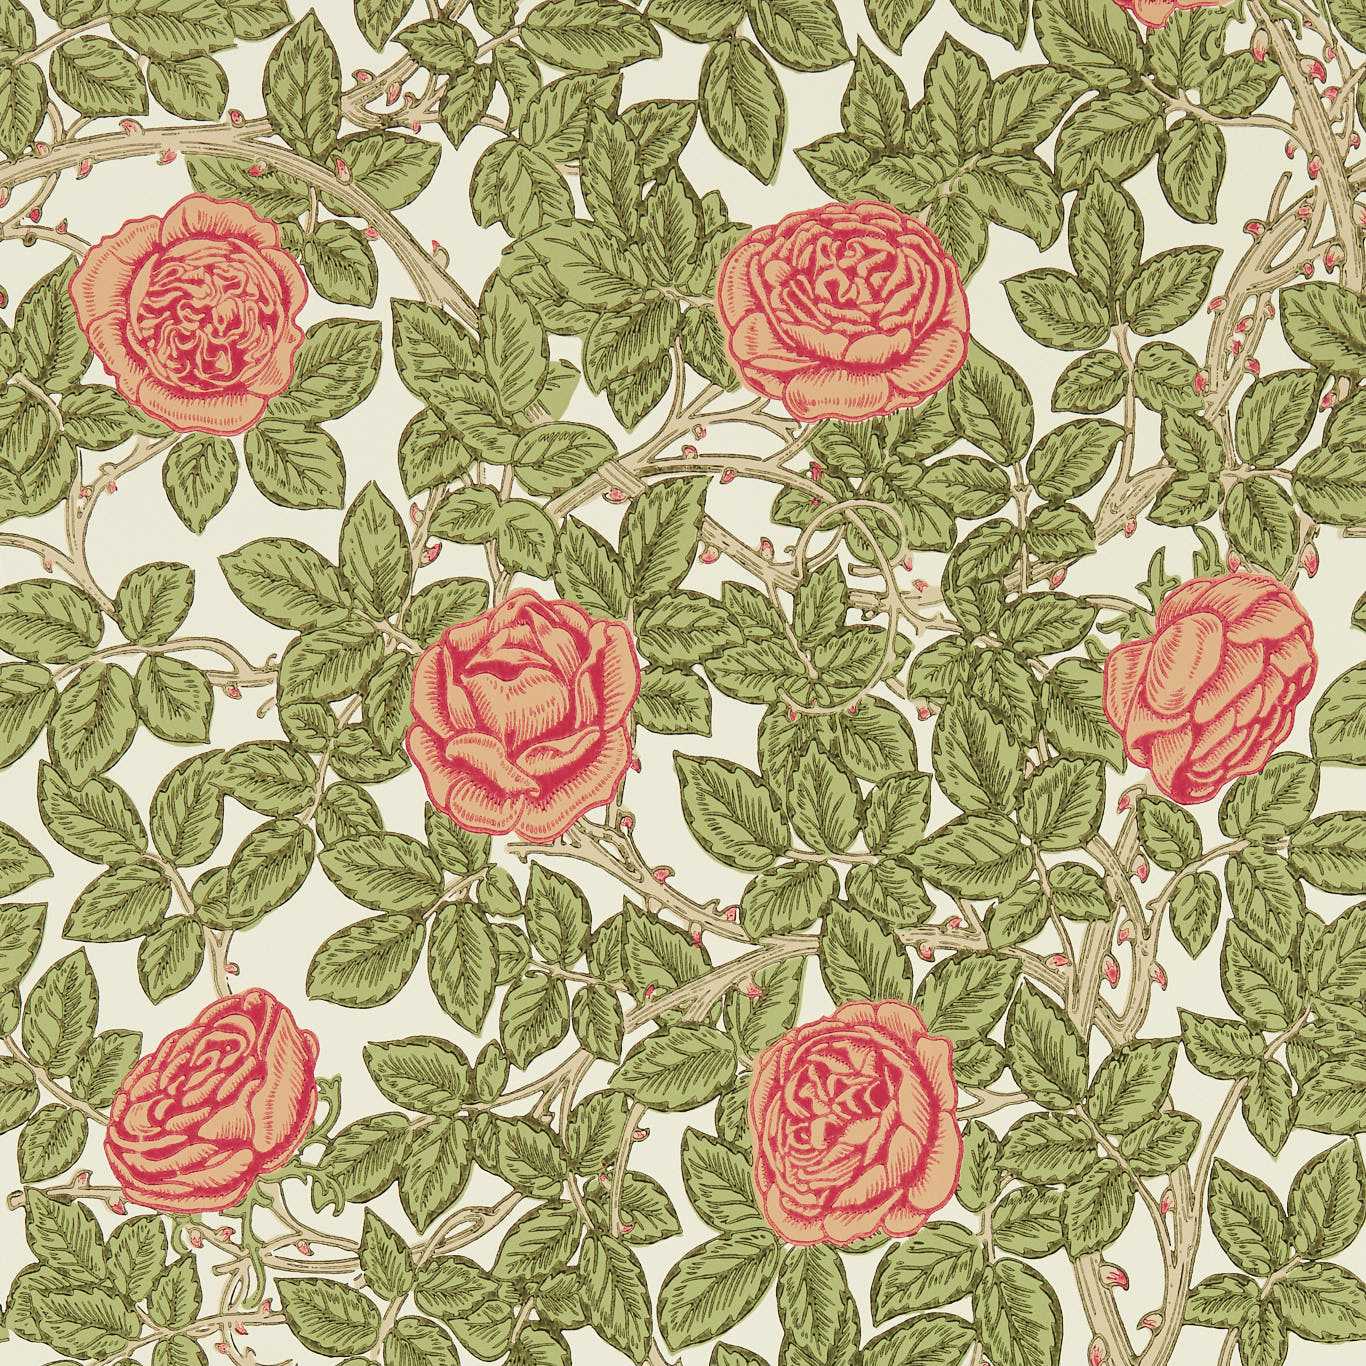 Rambling Rose Twining Vine Wallpaper MEWW217207 by Morris & Co